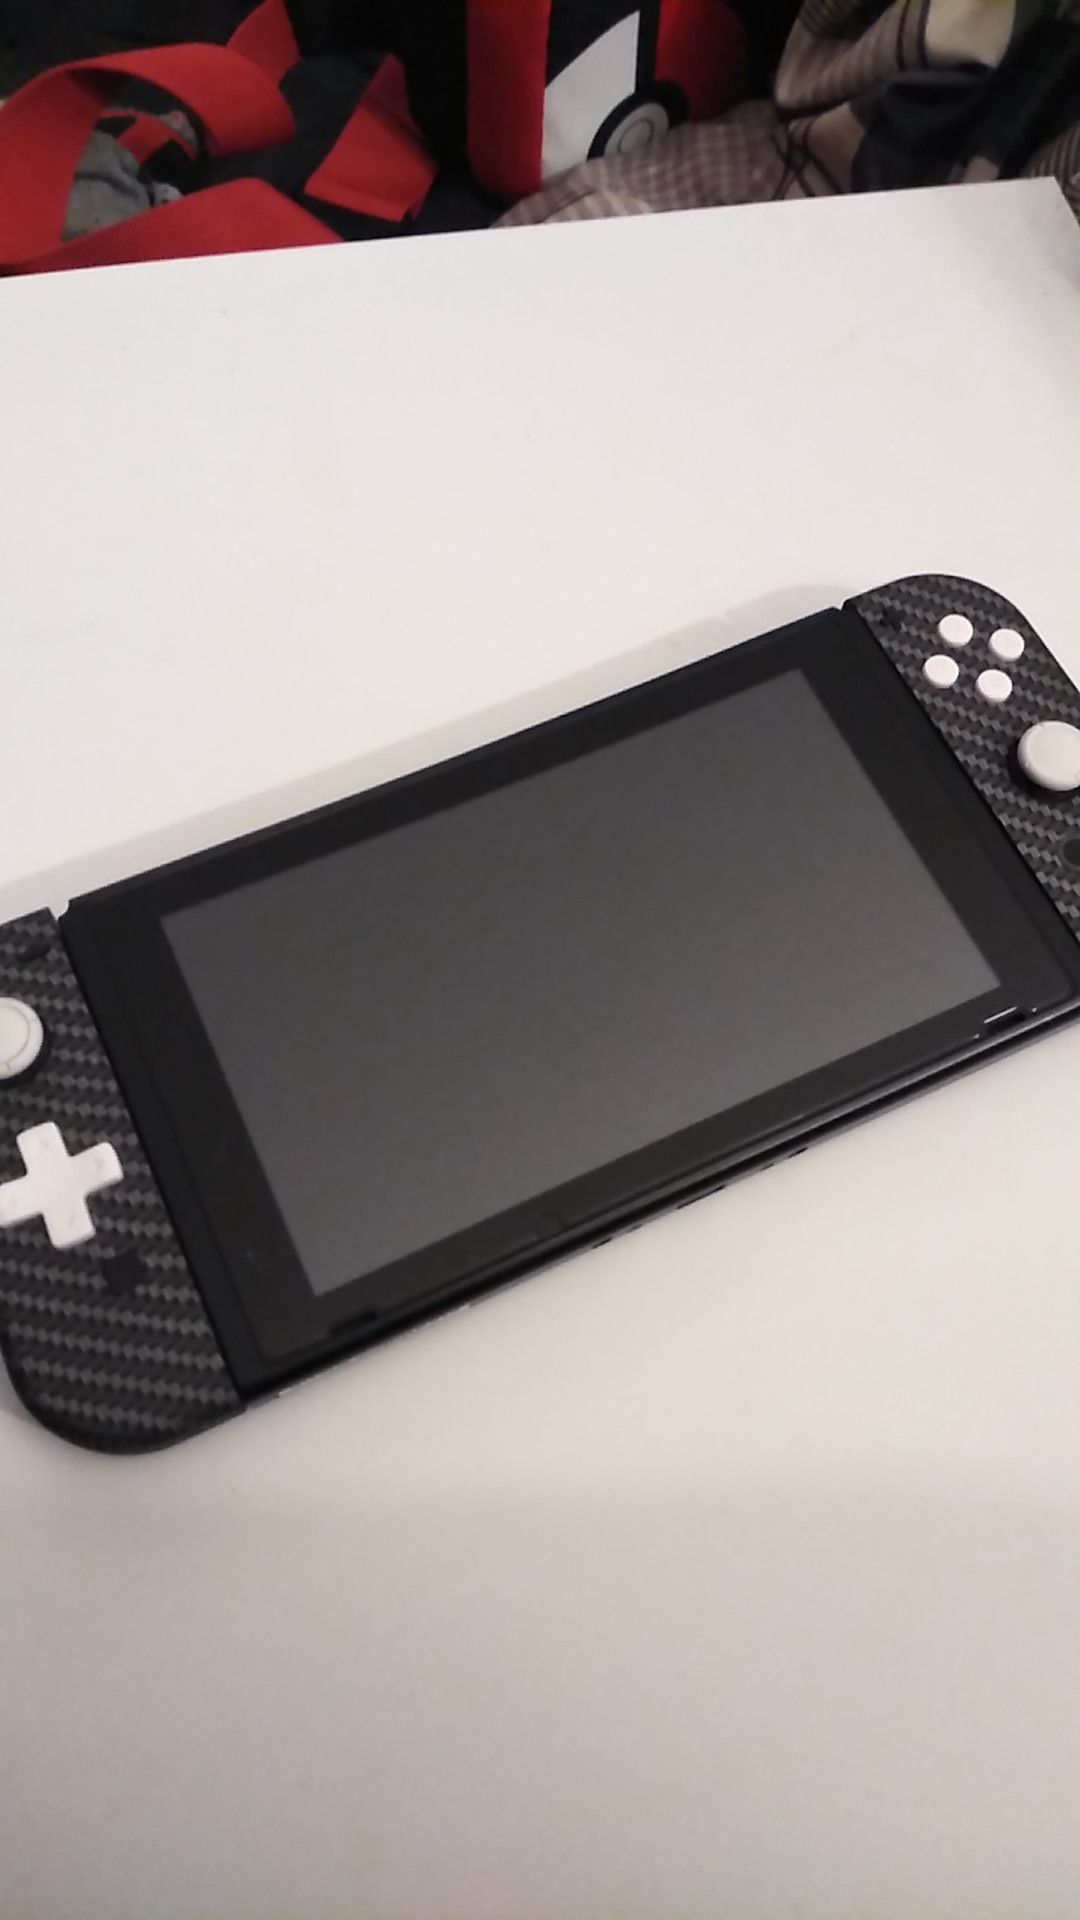 Custom Nintendo Joycon controller with D-pad